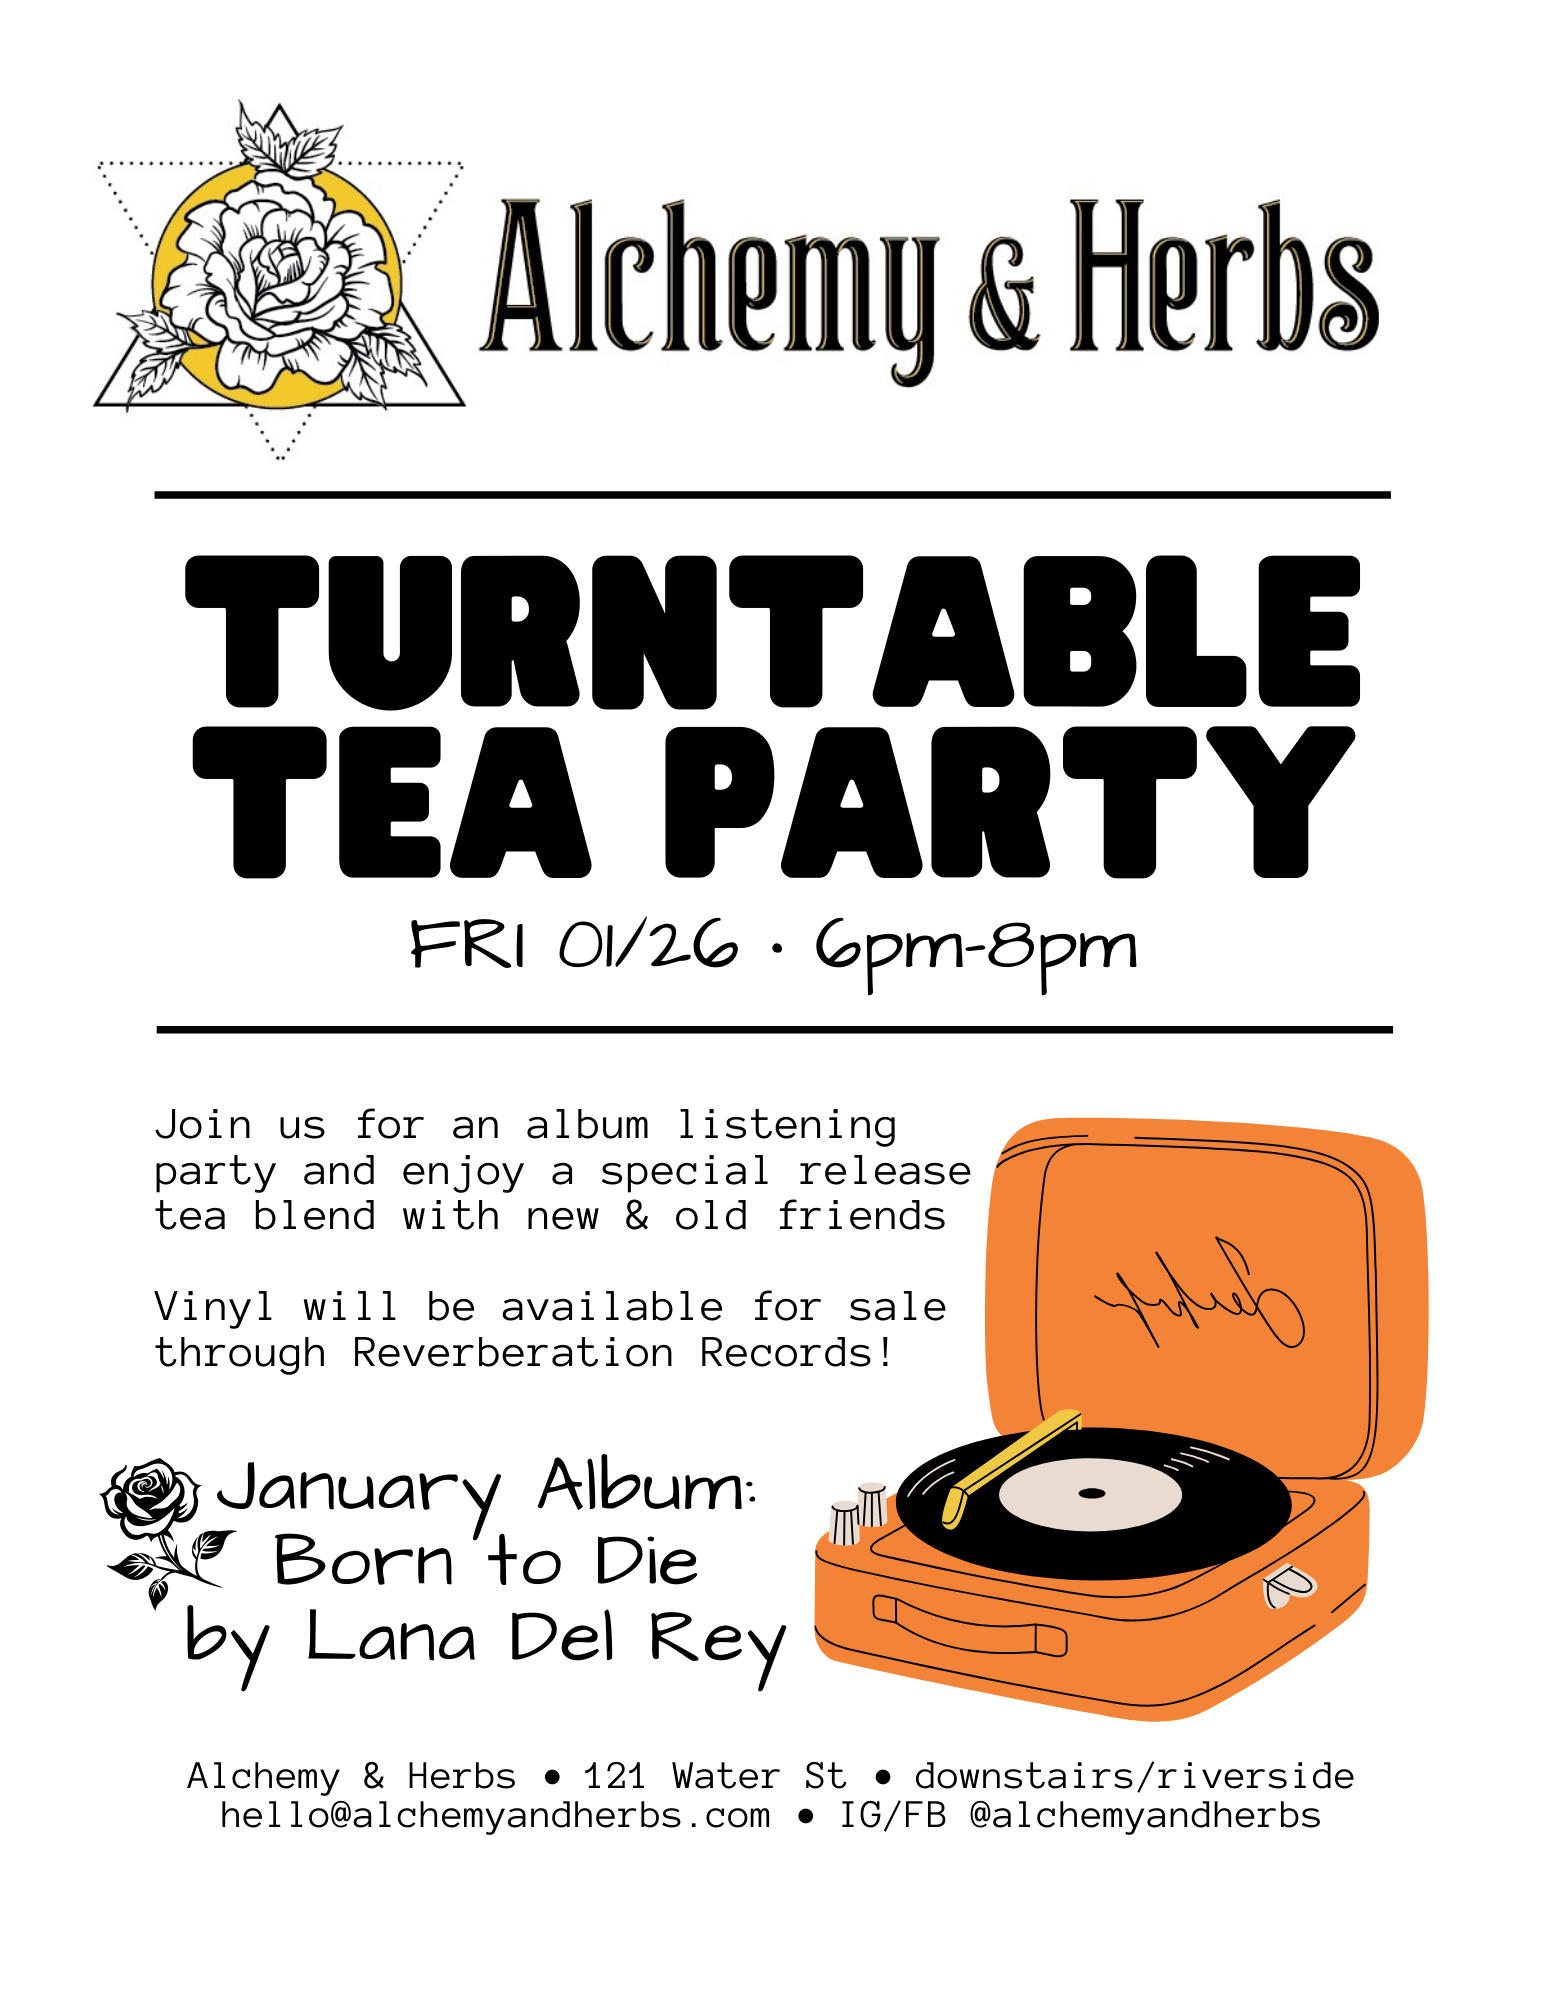 Turntable Tea Party - Featuring Lana Del Rey